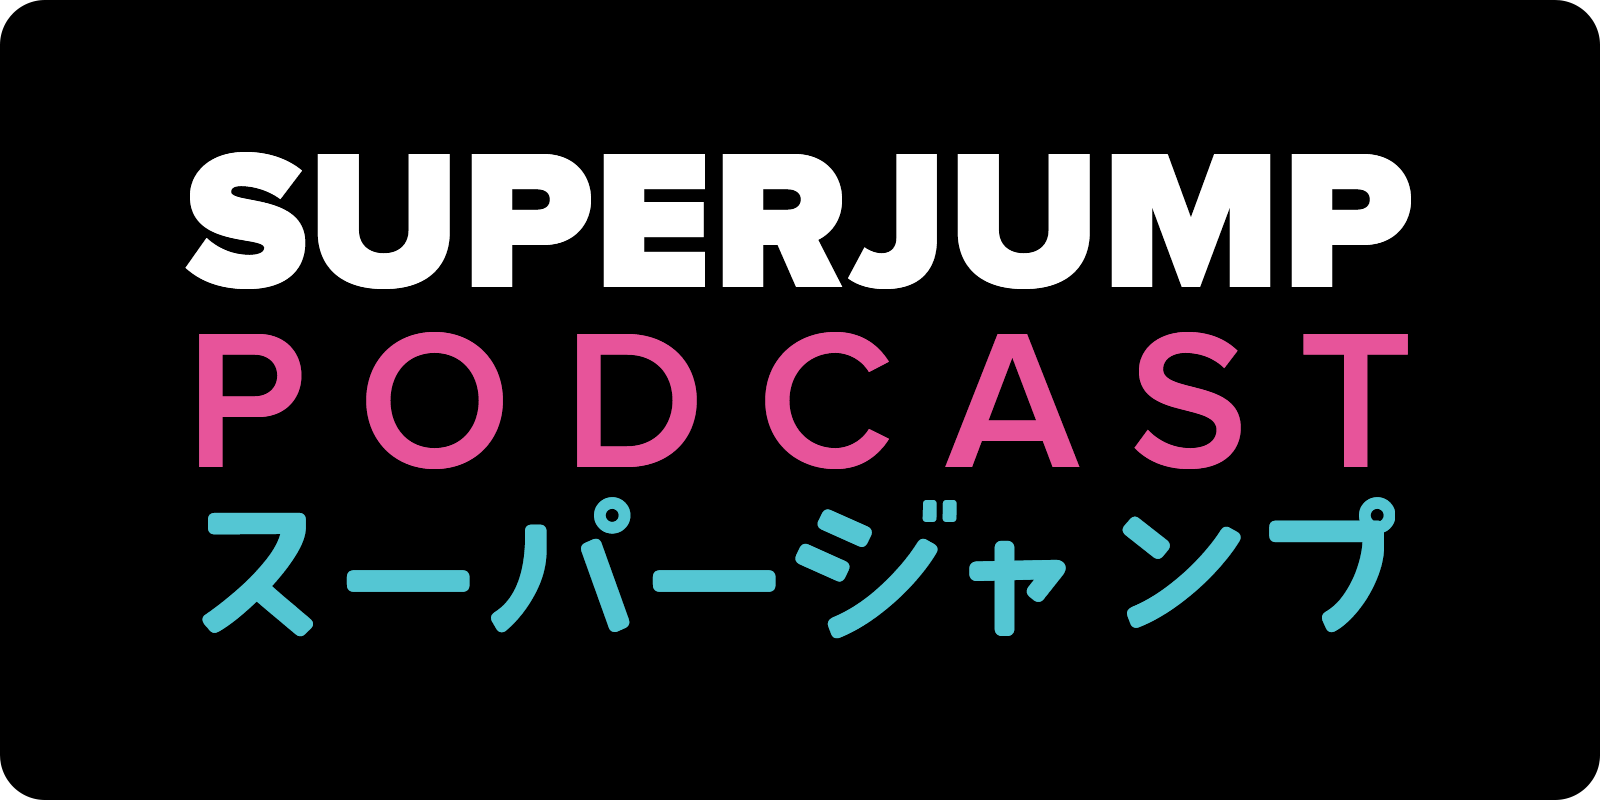 SUPERJUMP Podcast: Crunch